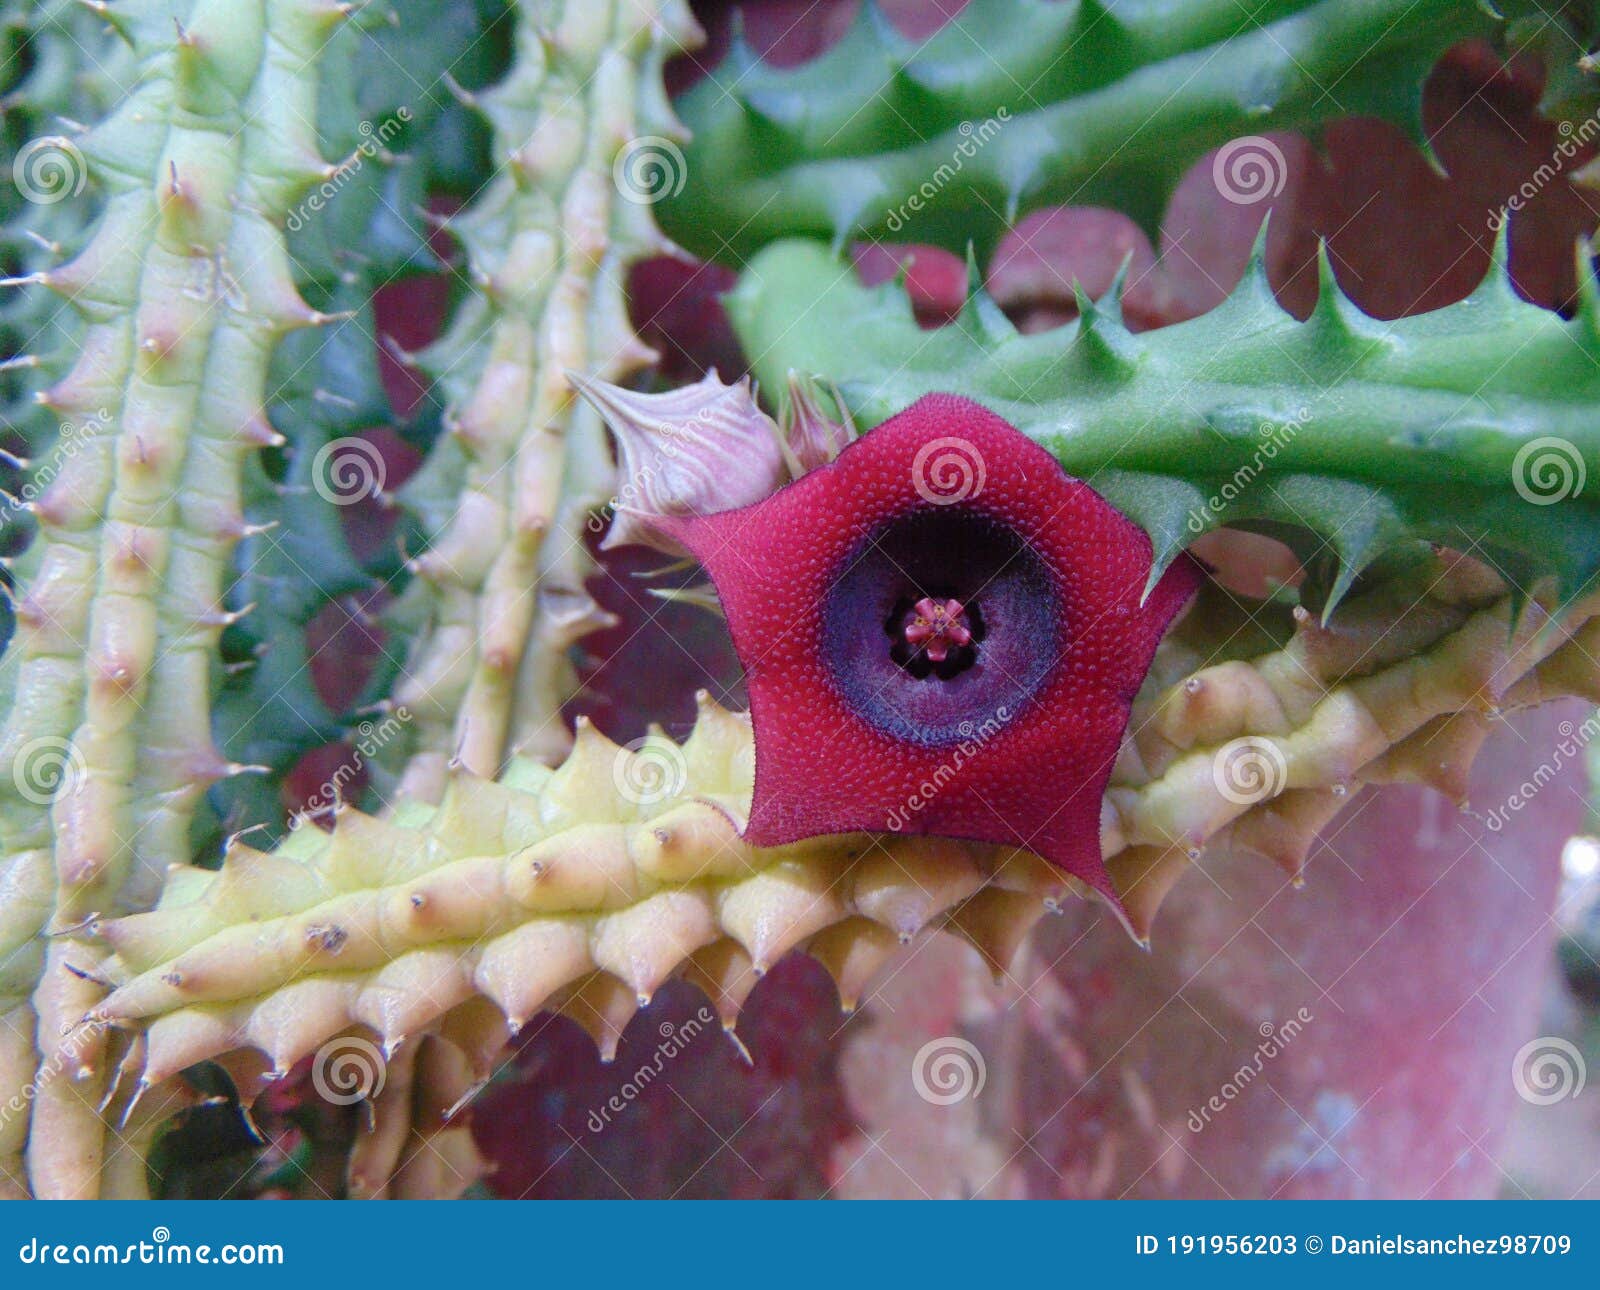 Rare cactus flower stock image. Image of enclosure, visited - 191956203